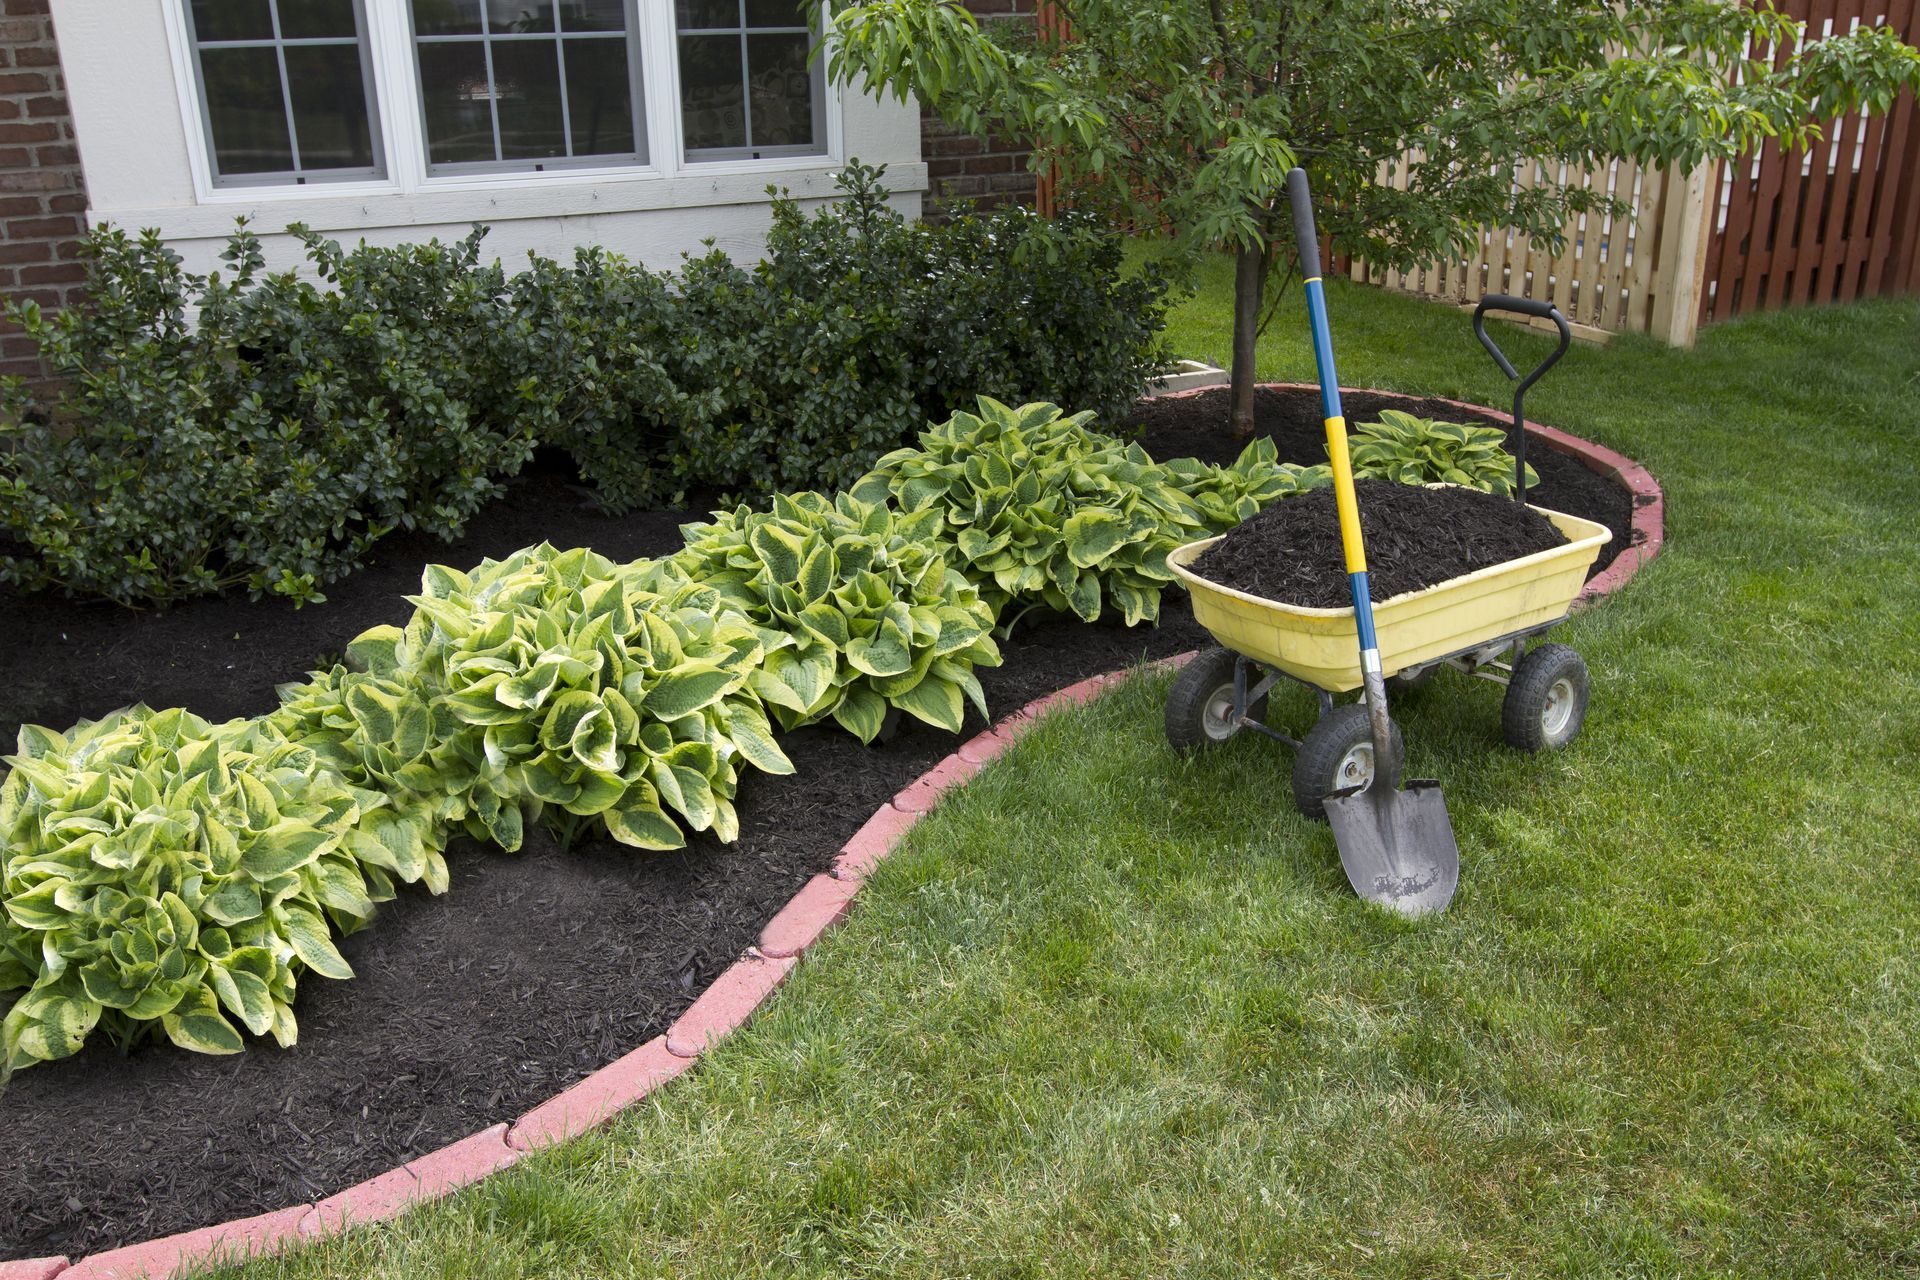 A wheelbarrow filled with dirt and a shovel in a garden.